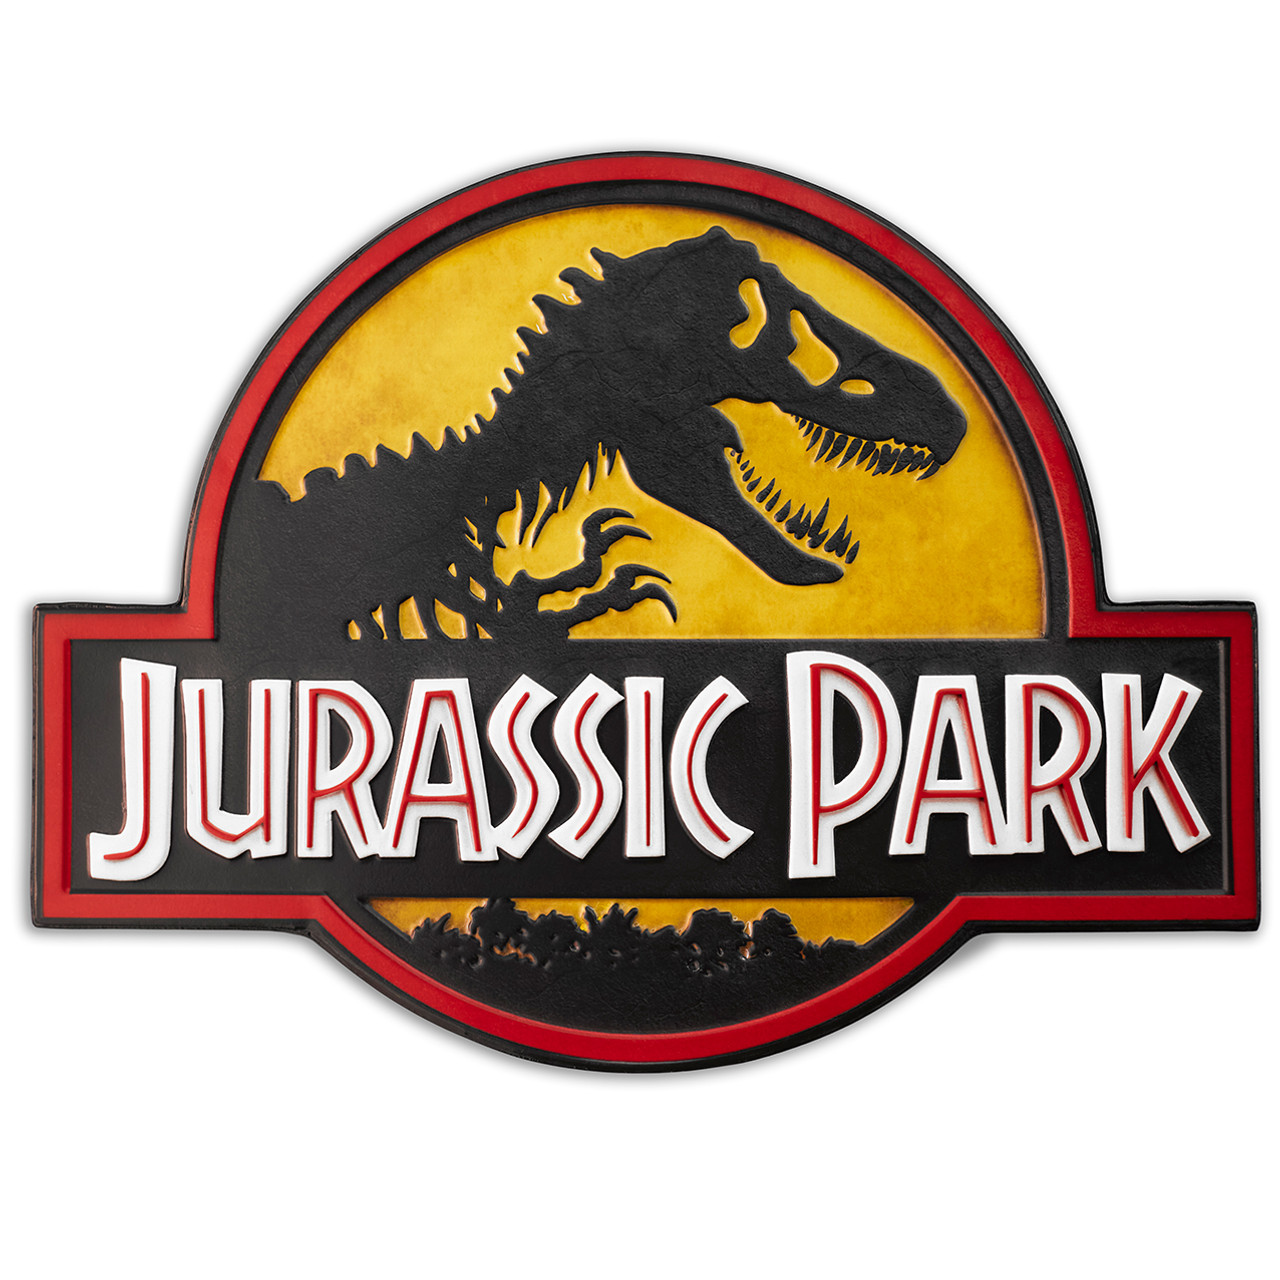 JURASSIC PARK - Metal logo